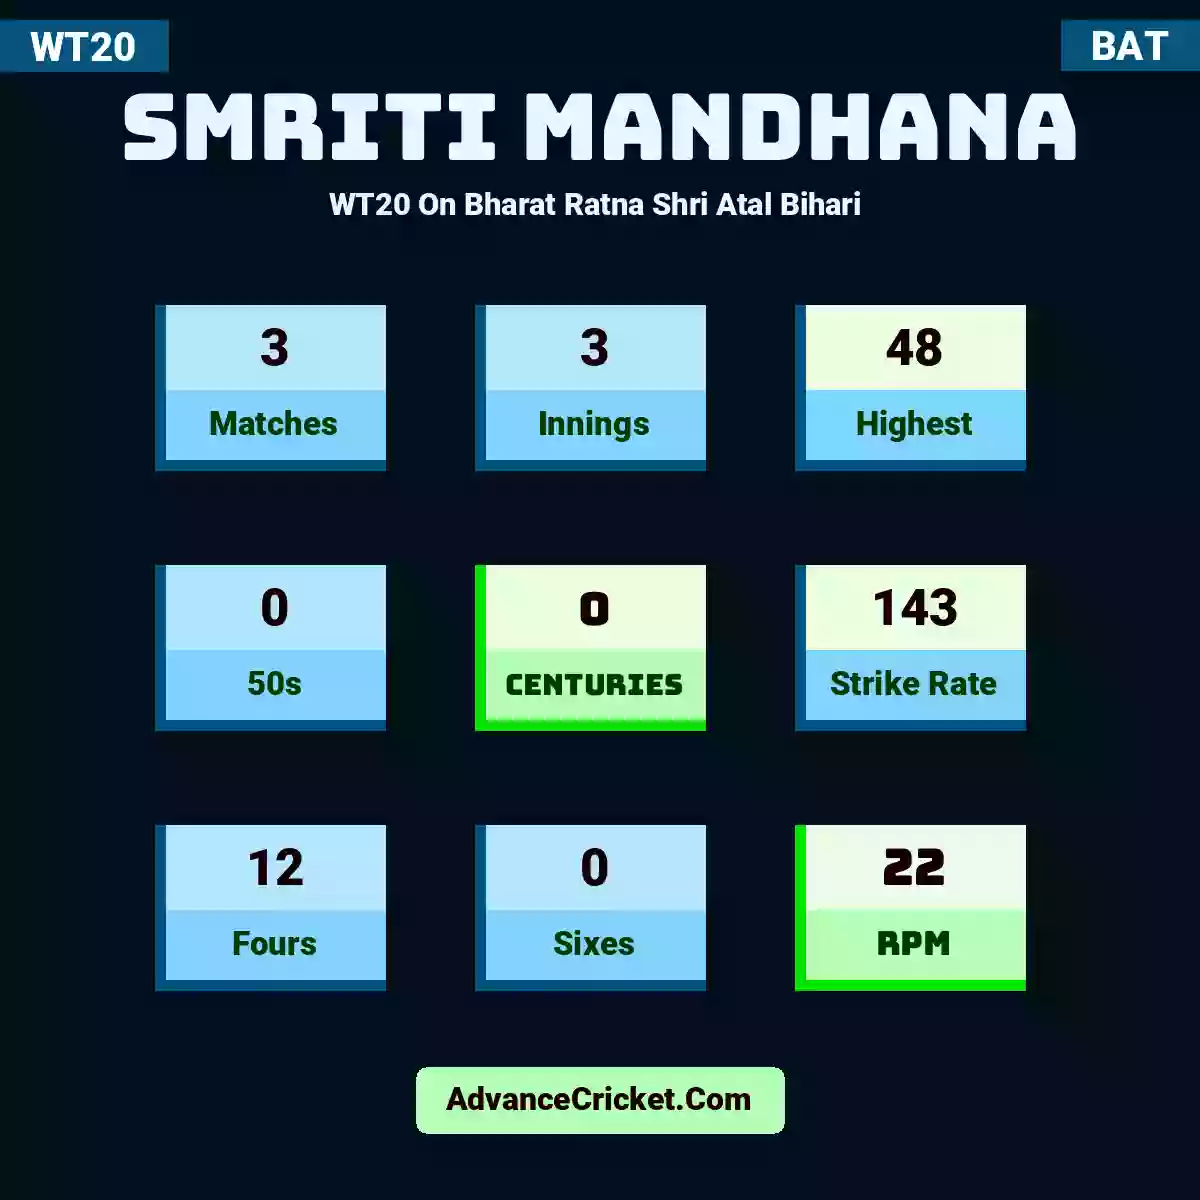 Smriti Mandhana WT20  On Bharat Ratna Shri Atal Bihari , Smriti Mandhana played 3 matches, scored 48 runs as highest, 0 half-centuries, and 0 centuries, with a strike rate of 143. S.Mandhana hit 12 fours and 0 sixes, with an RPM of 22.